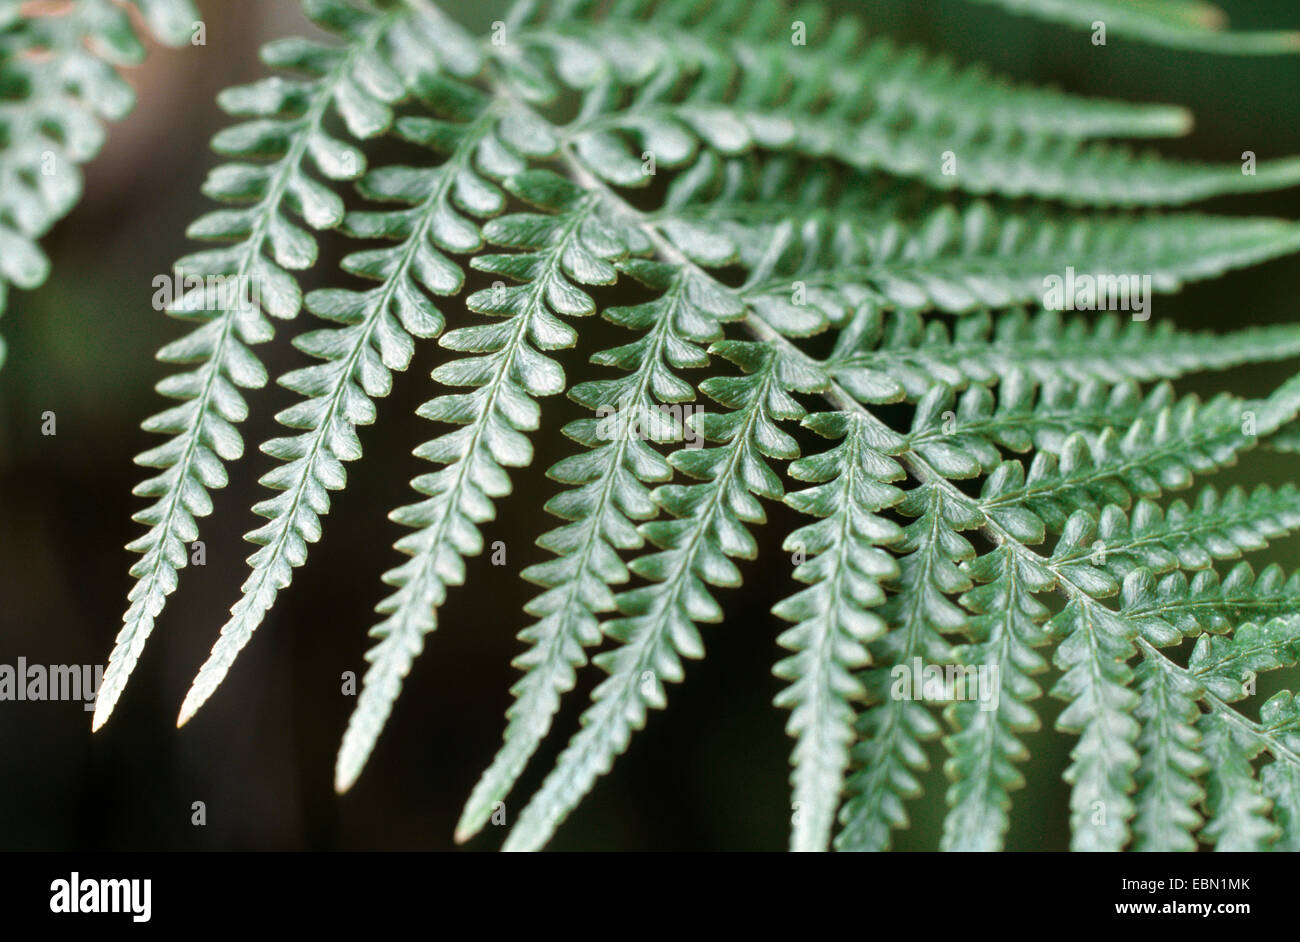 Dixie silverback fern (Pityrogramma calomelanos), detail of a frond Stock Photo